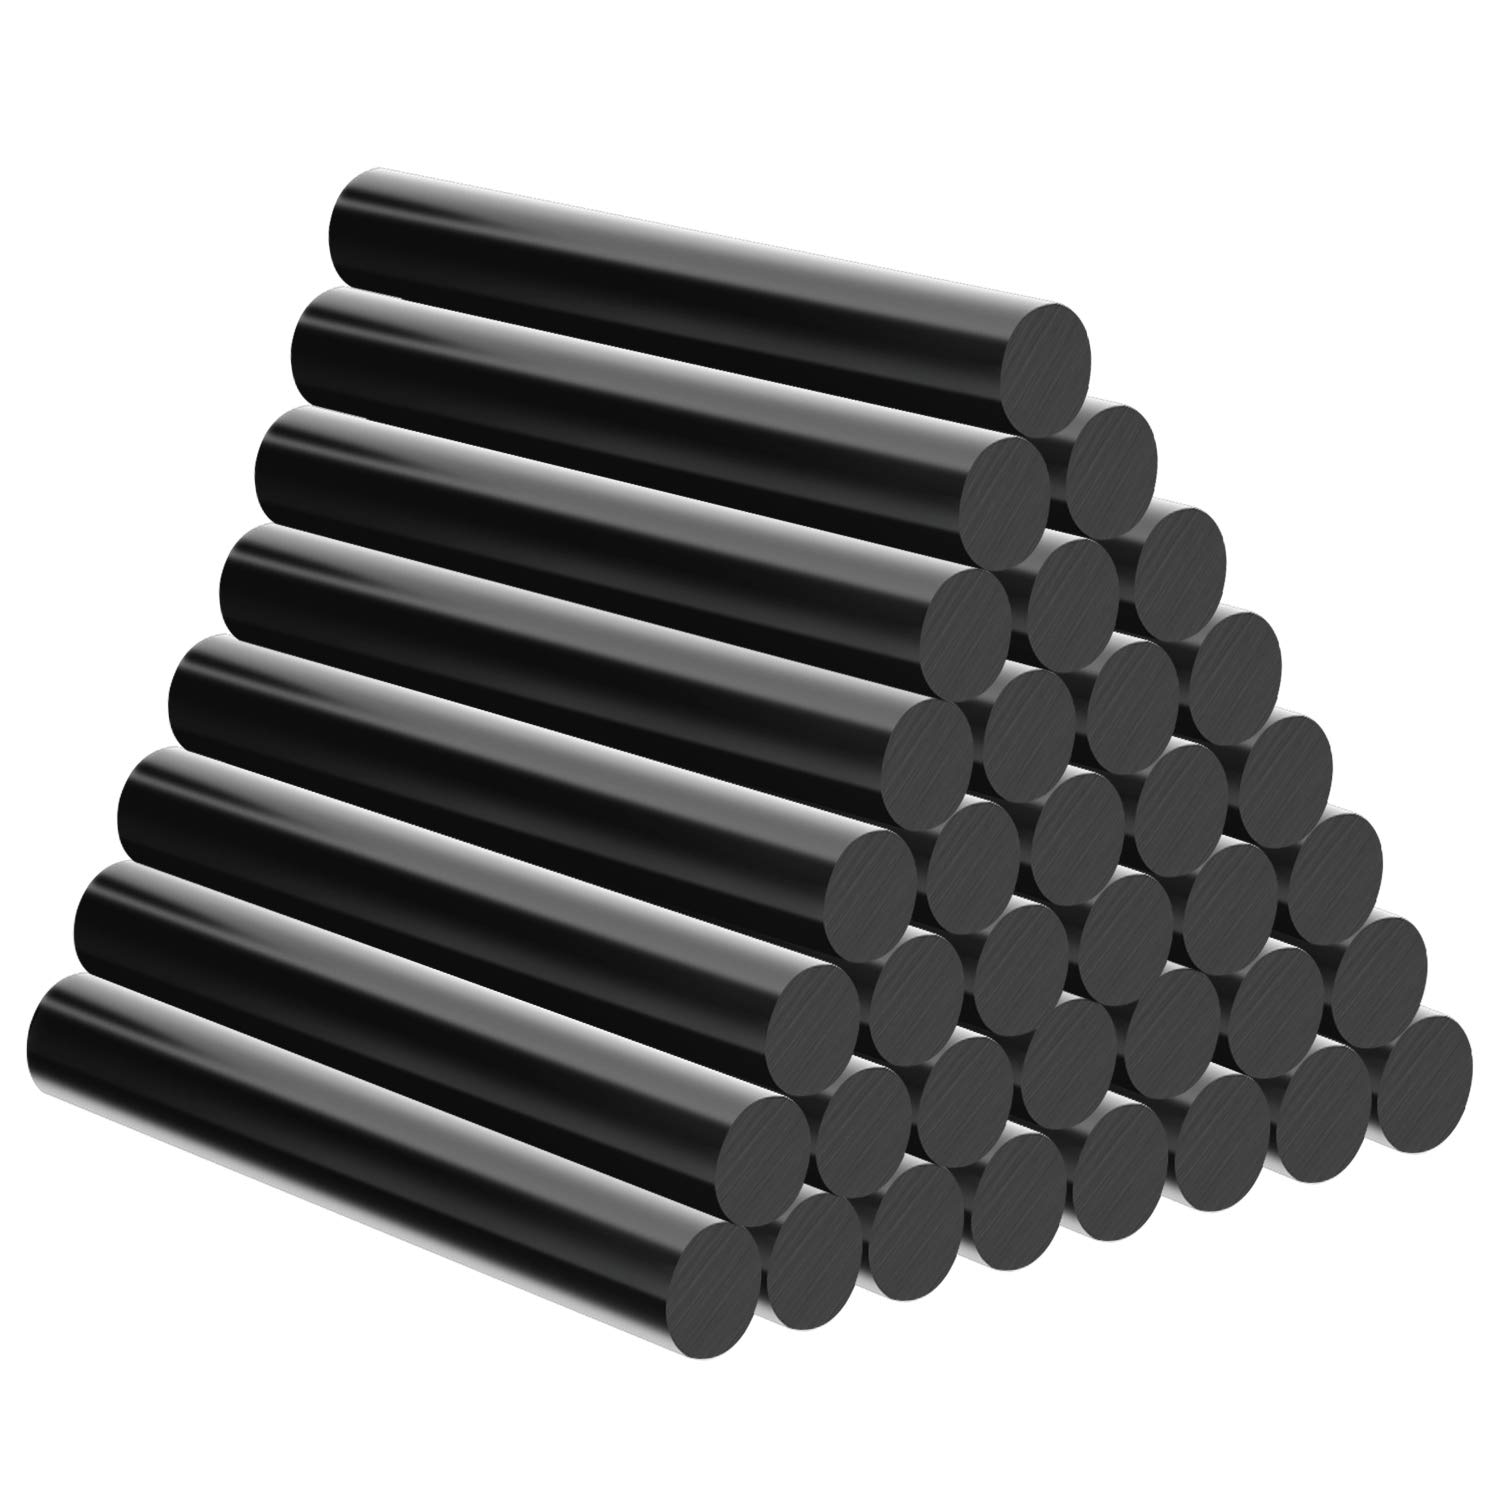 Manarty Black Hot Glue Sticks Full Size, 48 PCS Standard EVA Hot Melt  Adhesive Gluing Stick, High Low Temp for Handmade Car DIY Art Cr